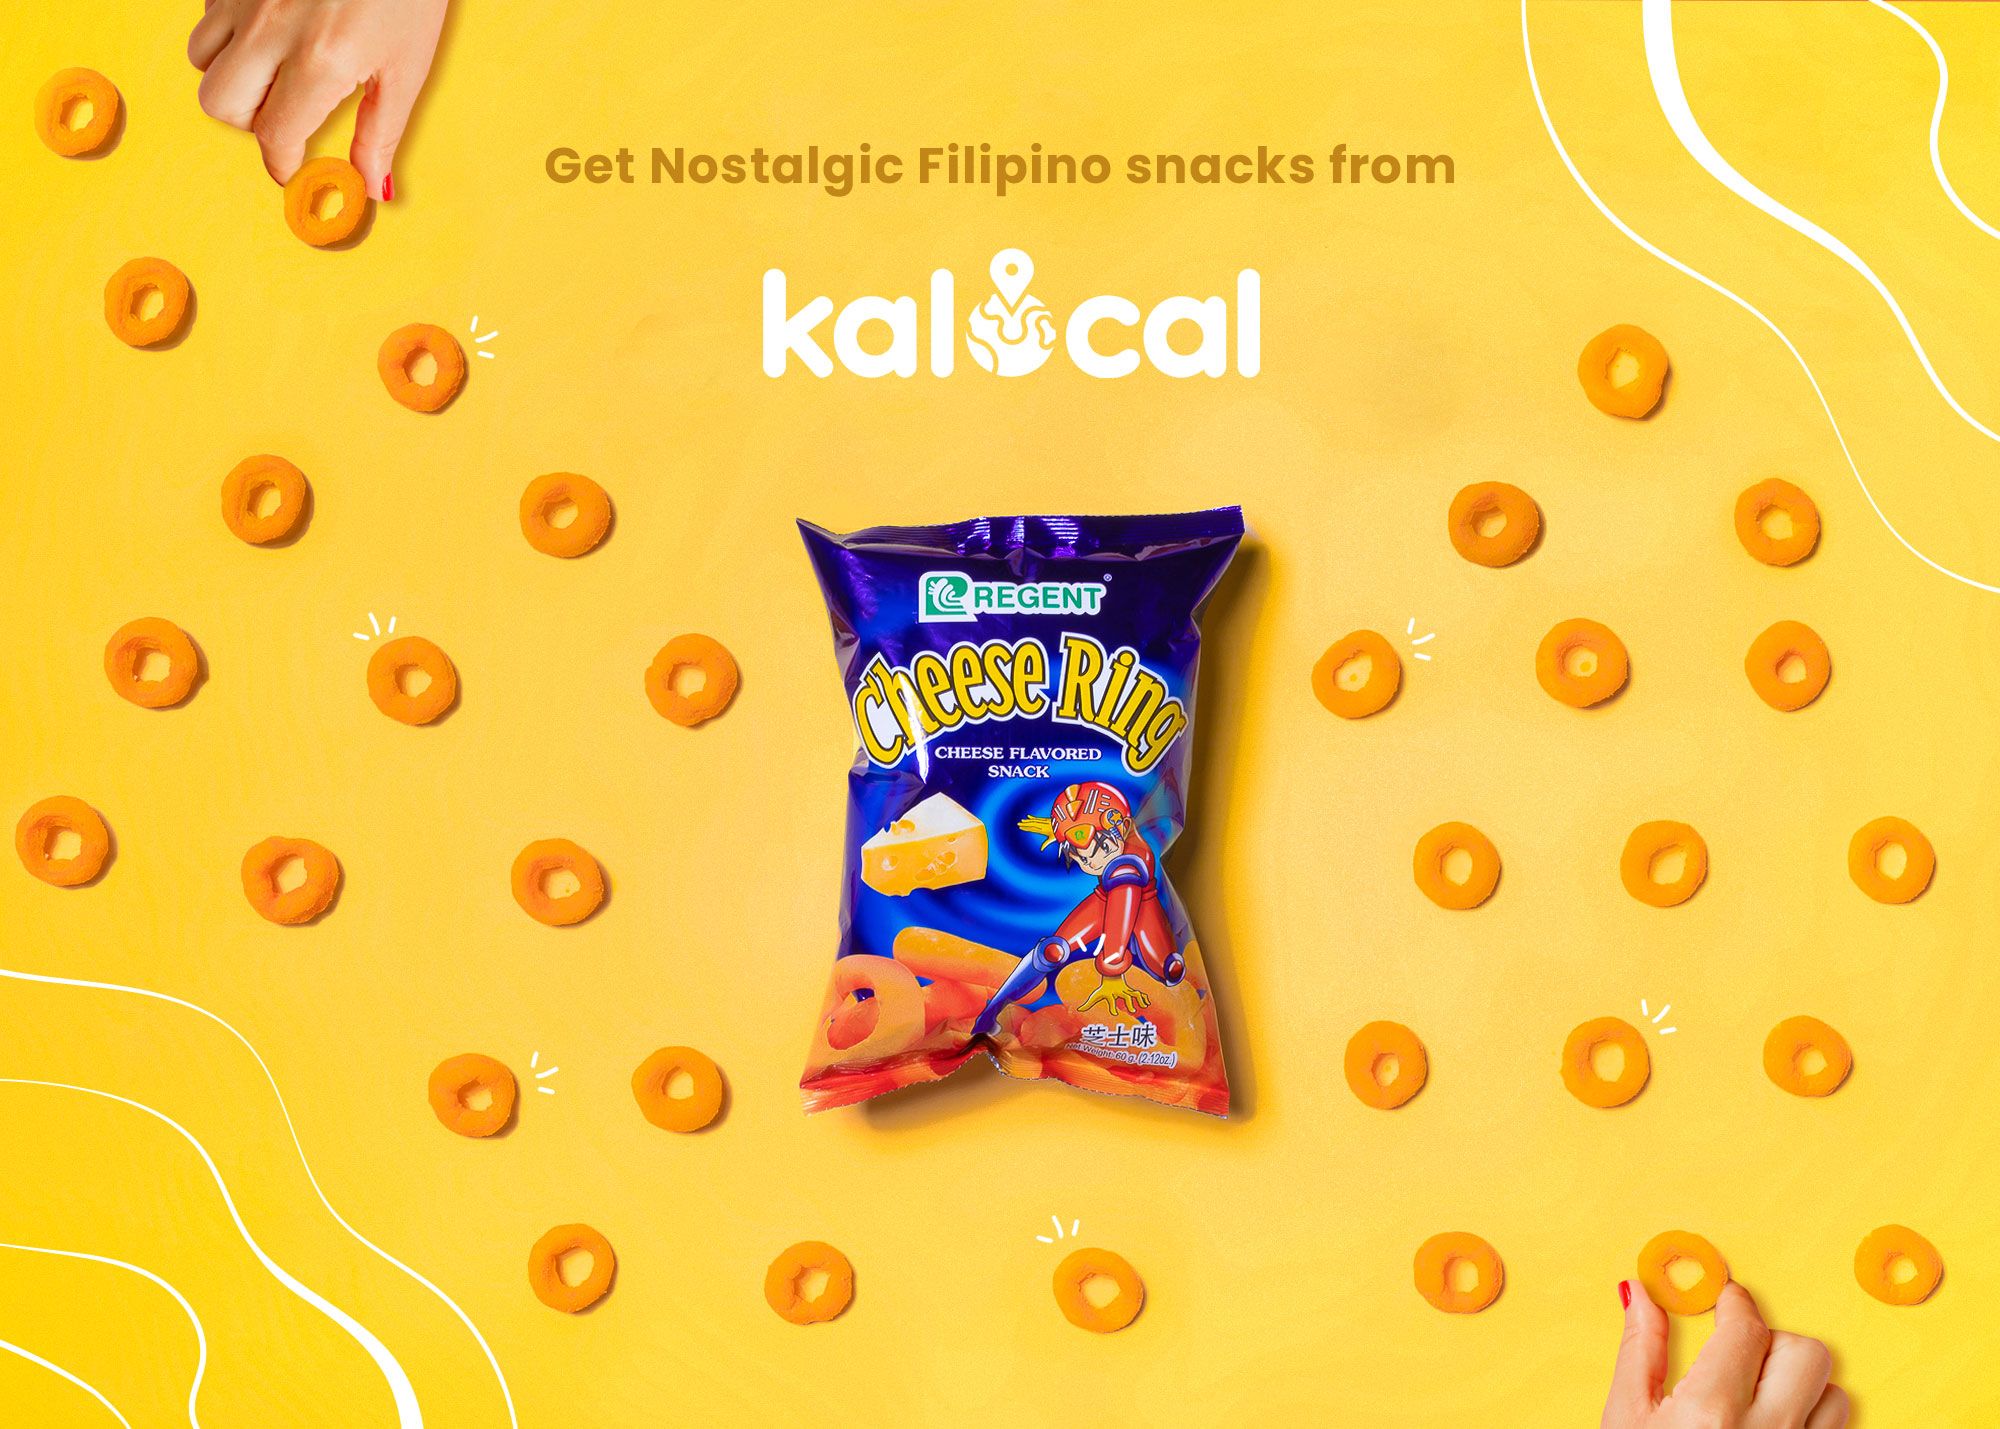 Get Nostalgic Filipino snacks from Kalocal